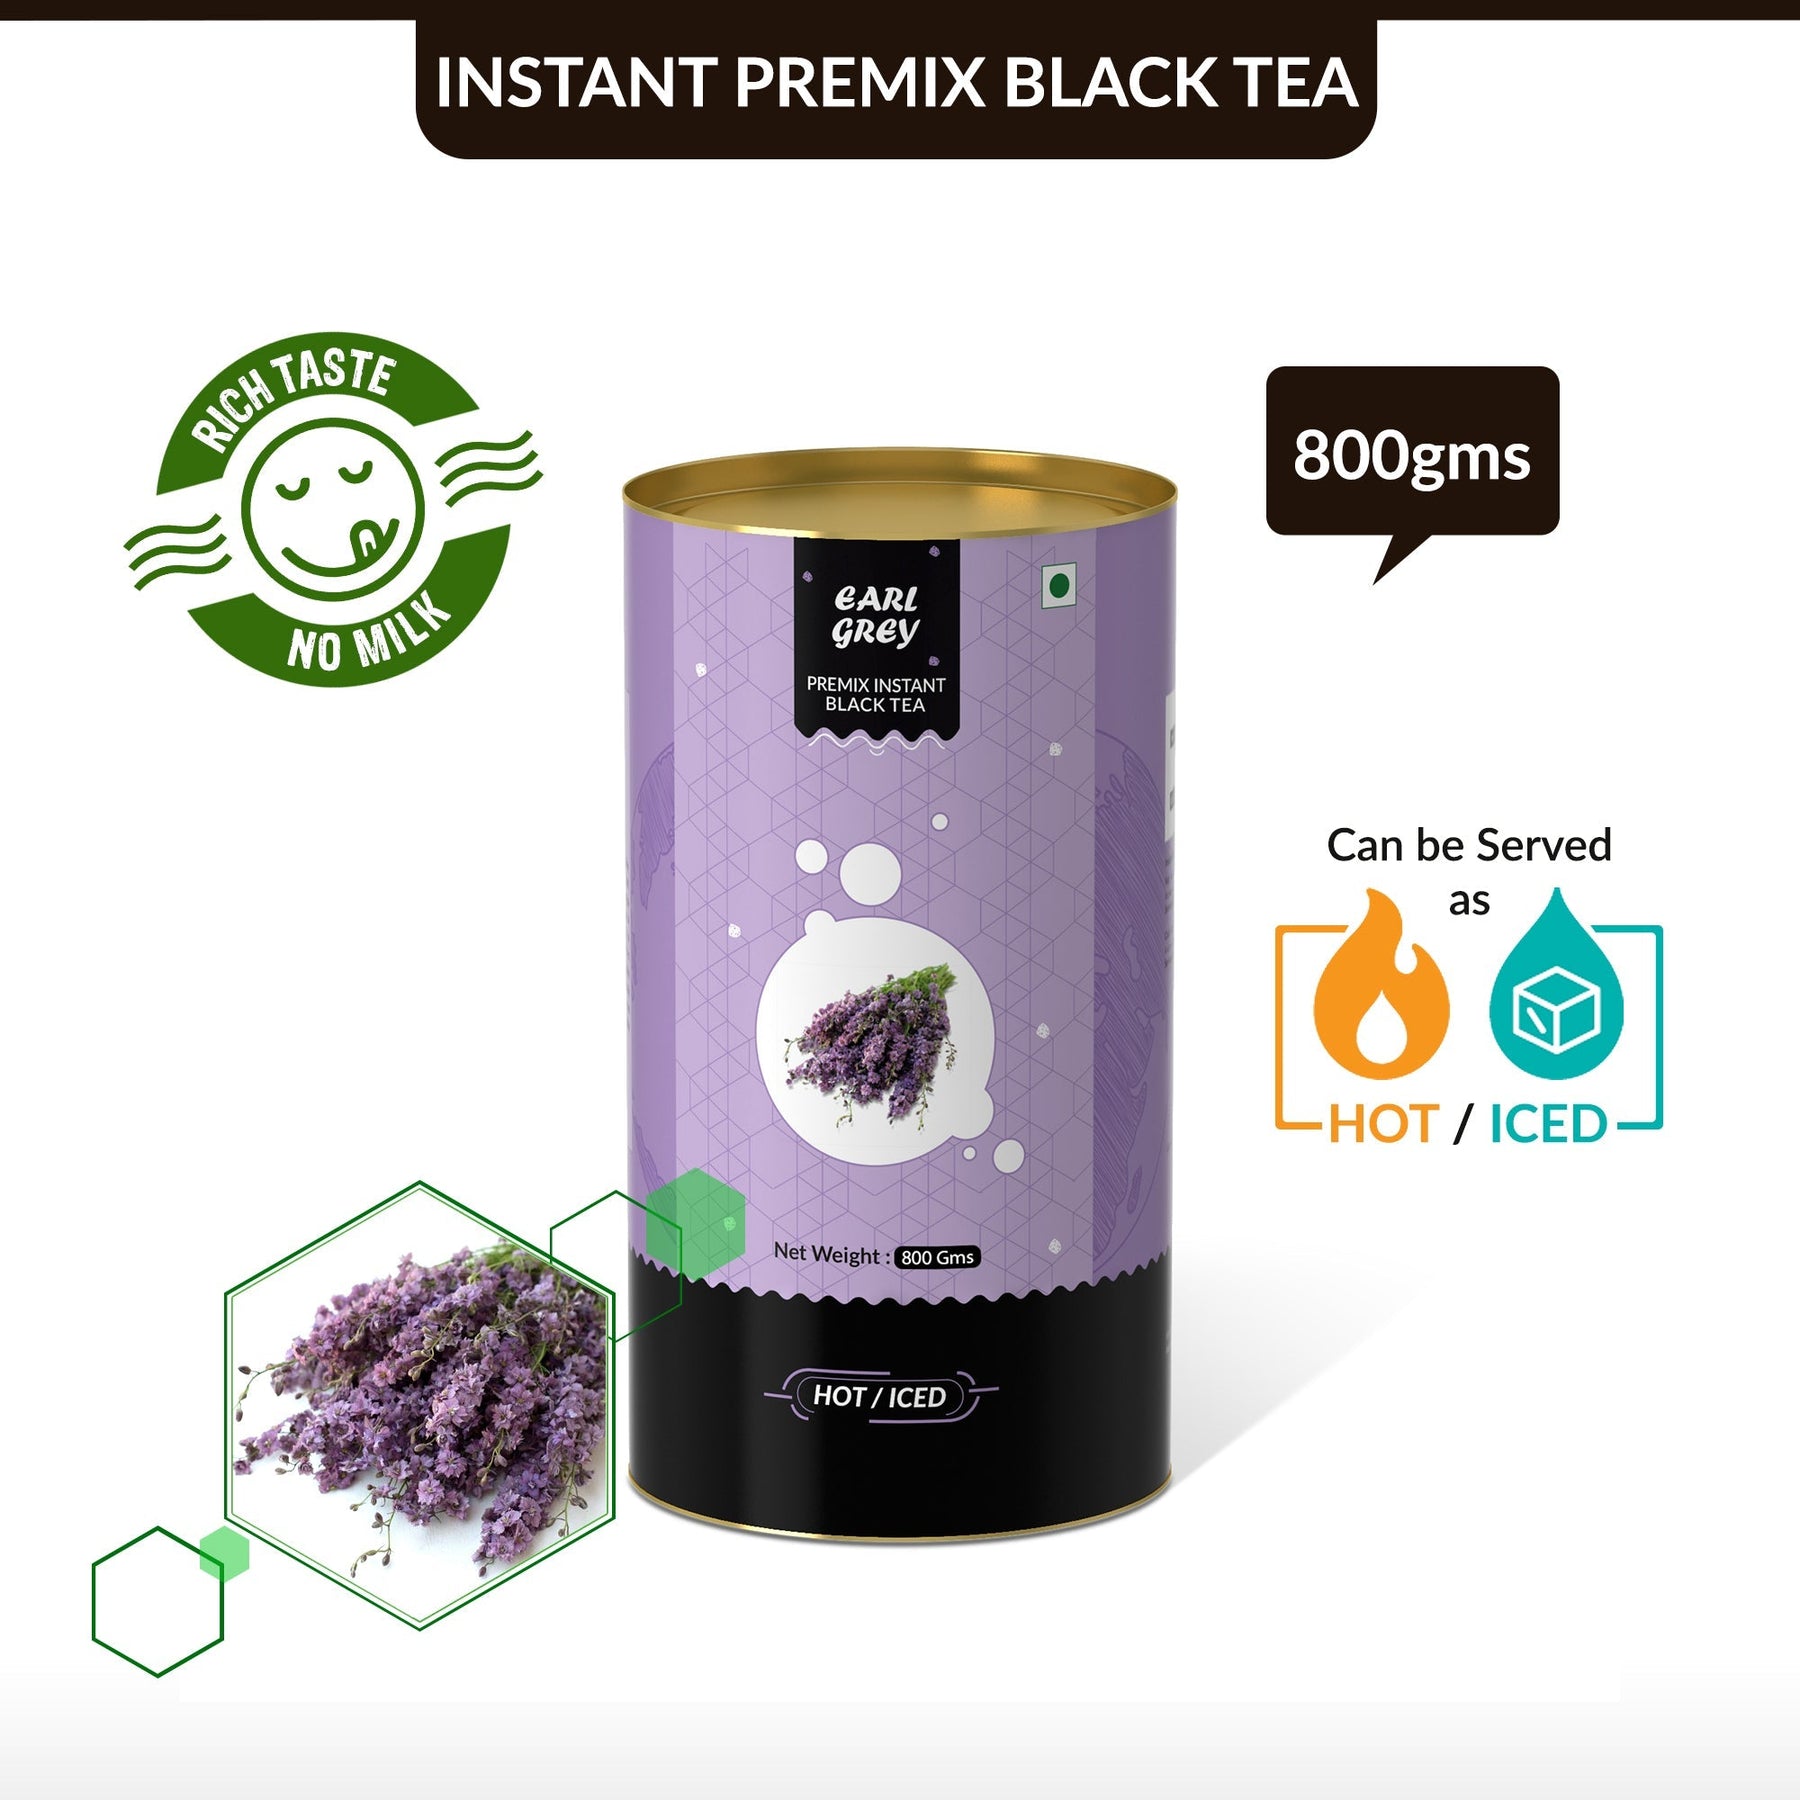 Earl Grey Flavored Instant Black Tea - 800 gms